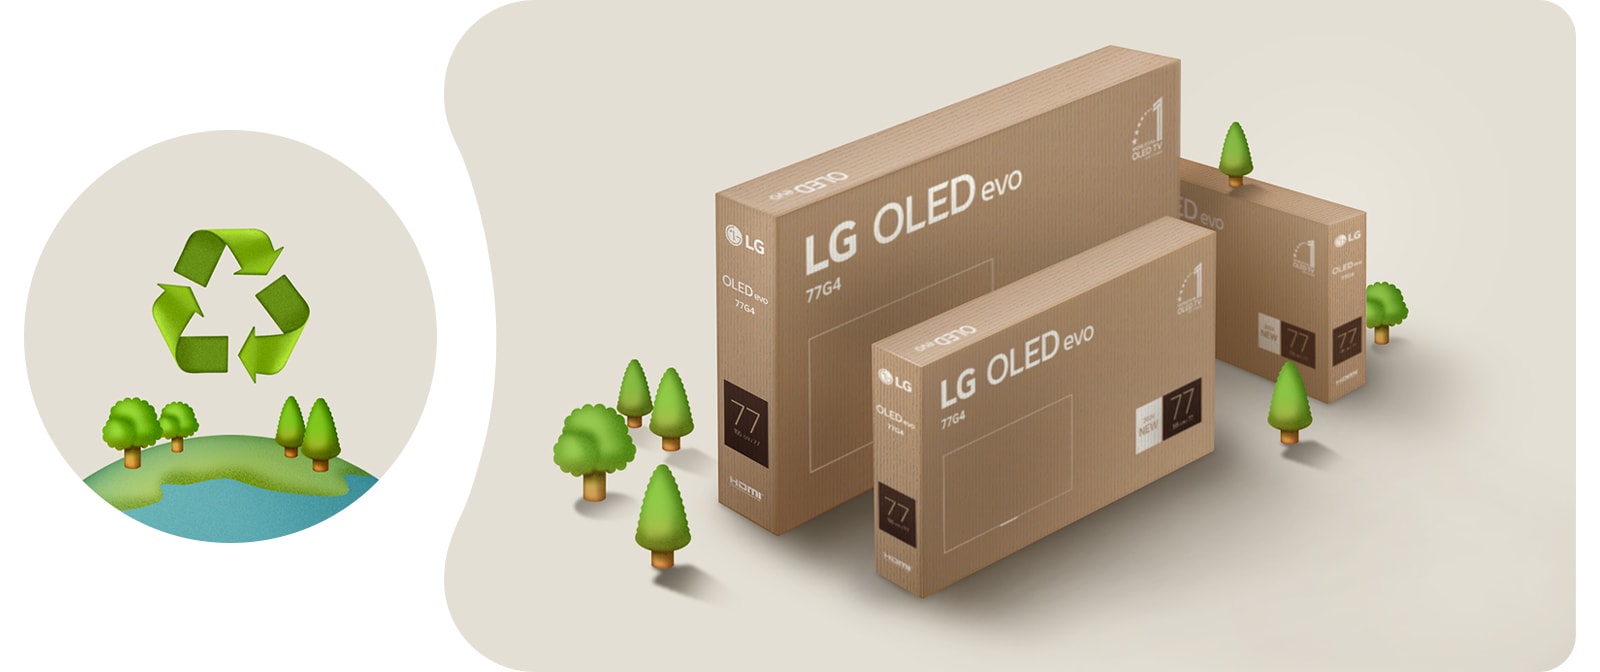 Emballage LG OLED sur fond beige avec arbres illustrés. 